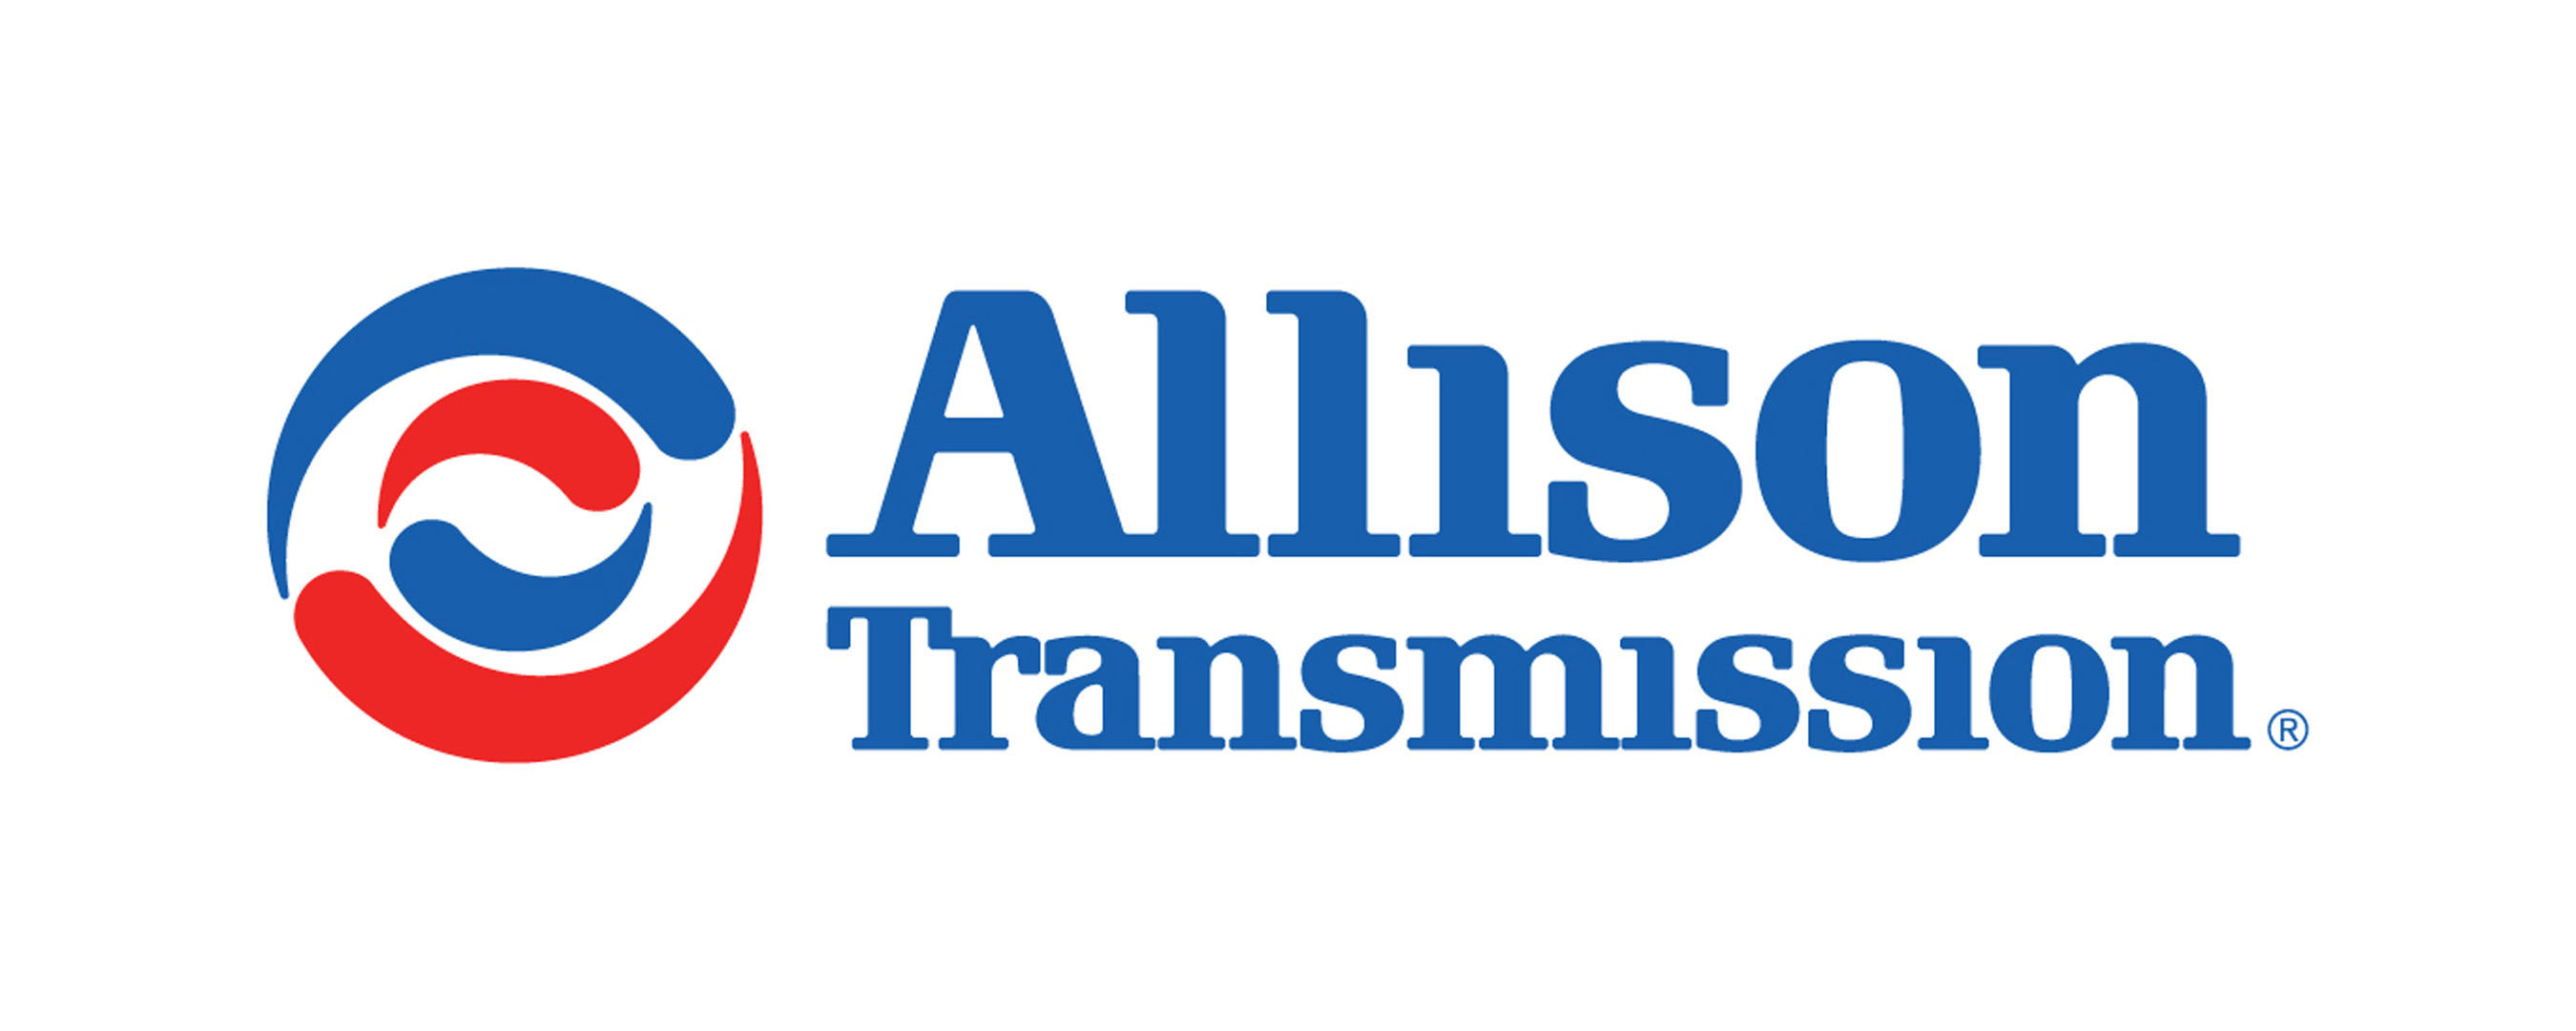 Allison Transmission Inc. logo. (PRNewsFoto/Allison Transmission Inc.) (PRNewsFoto/)